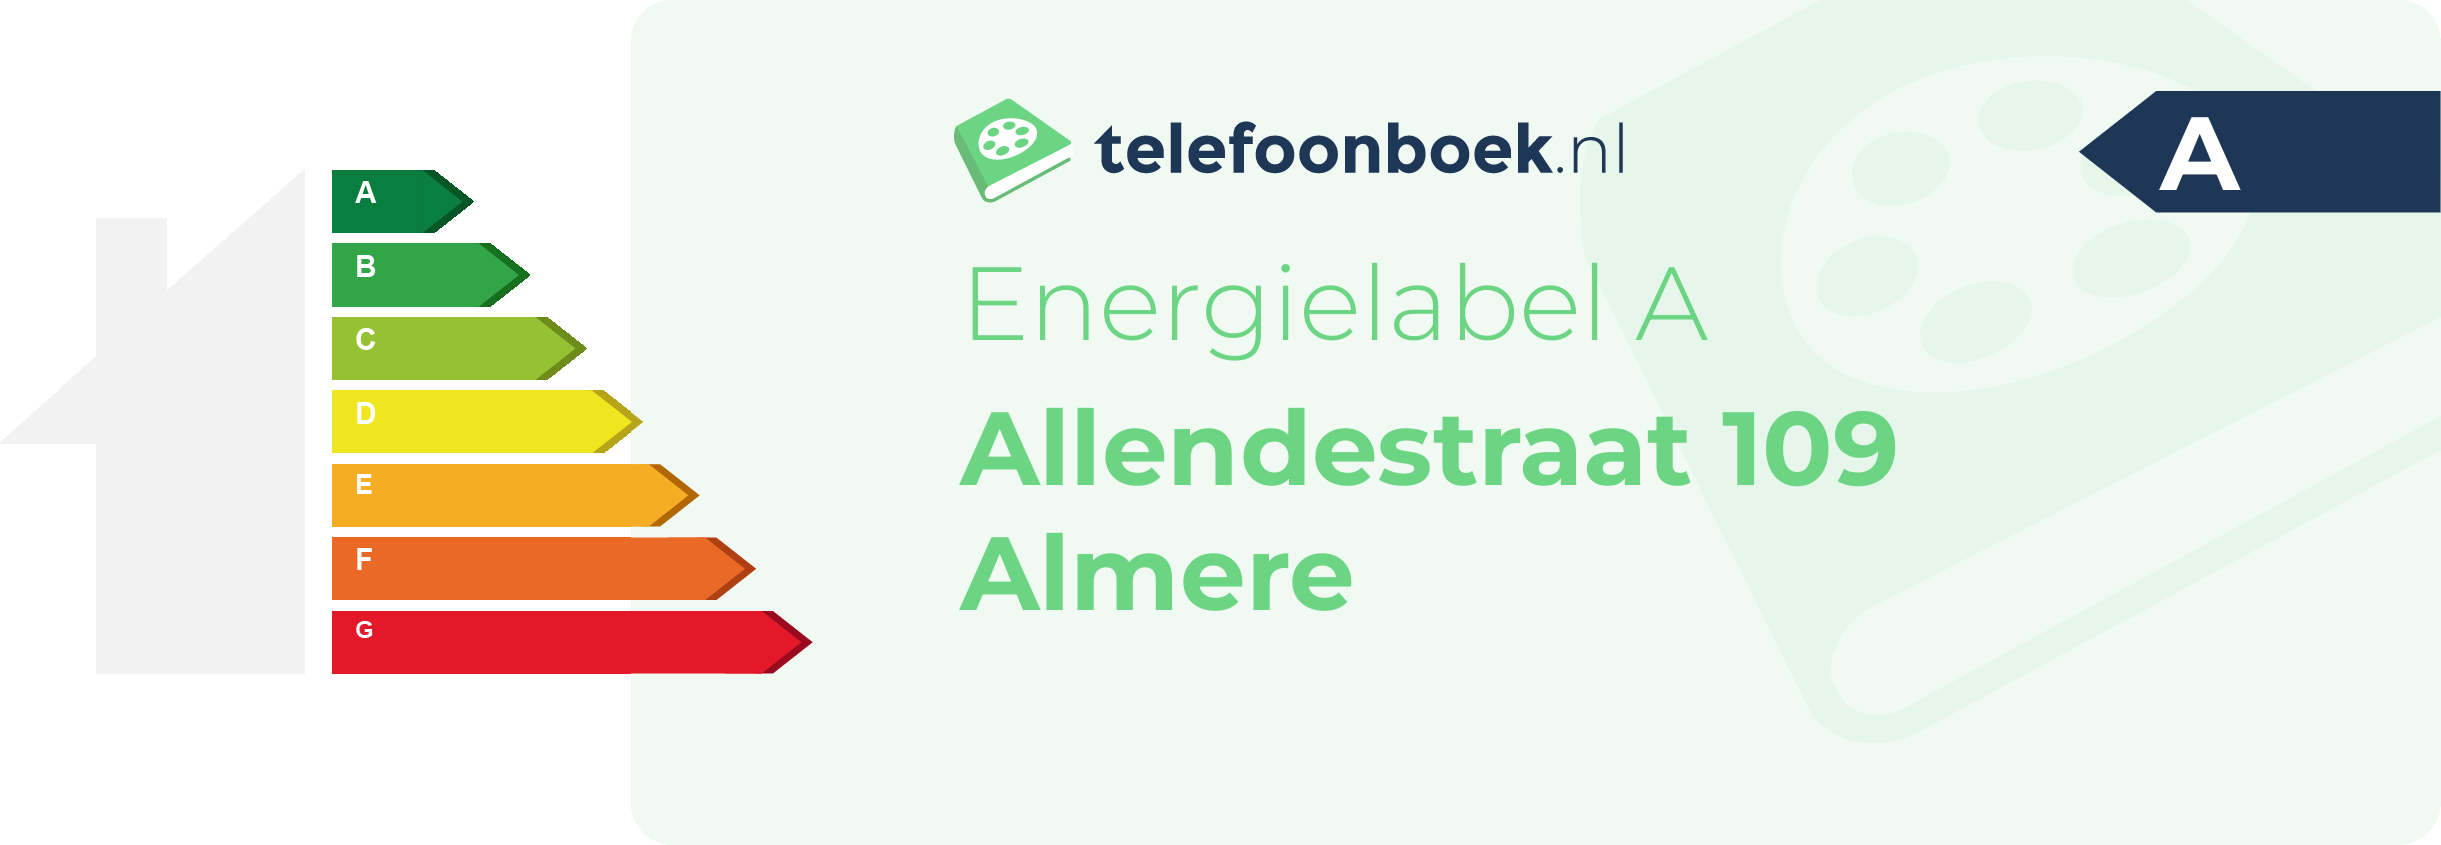 Energielabel Allendestraat 109 Almere